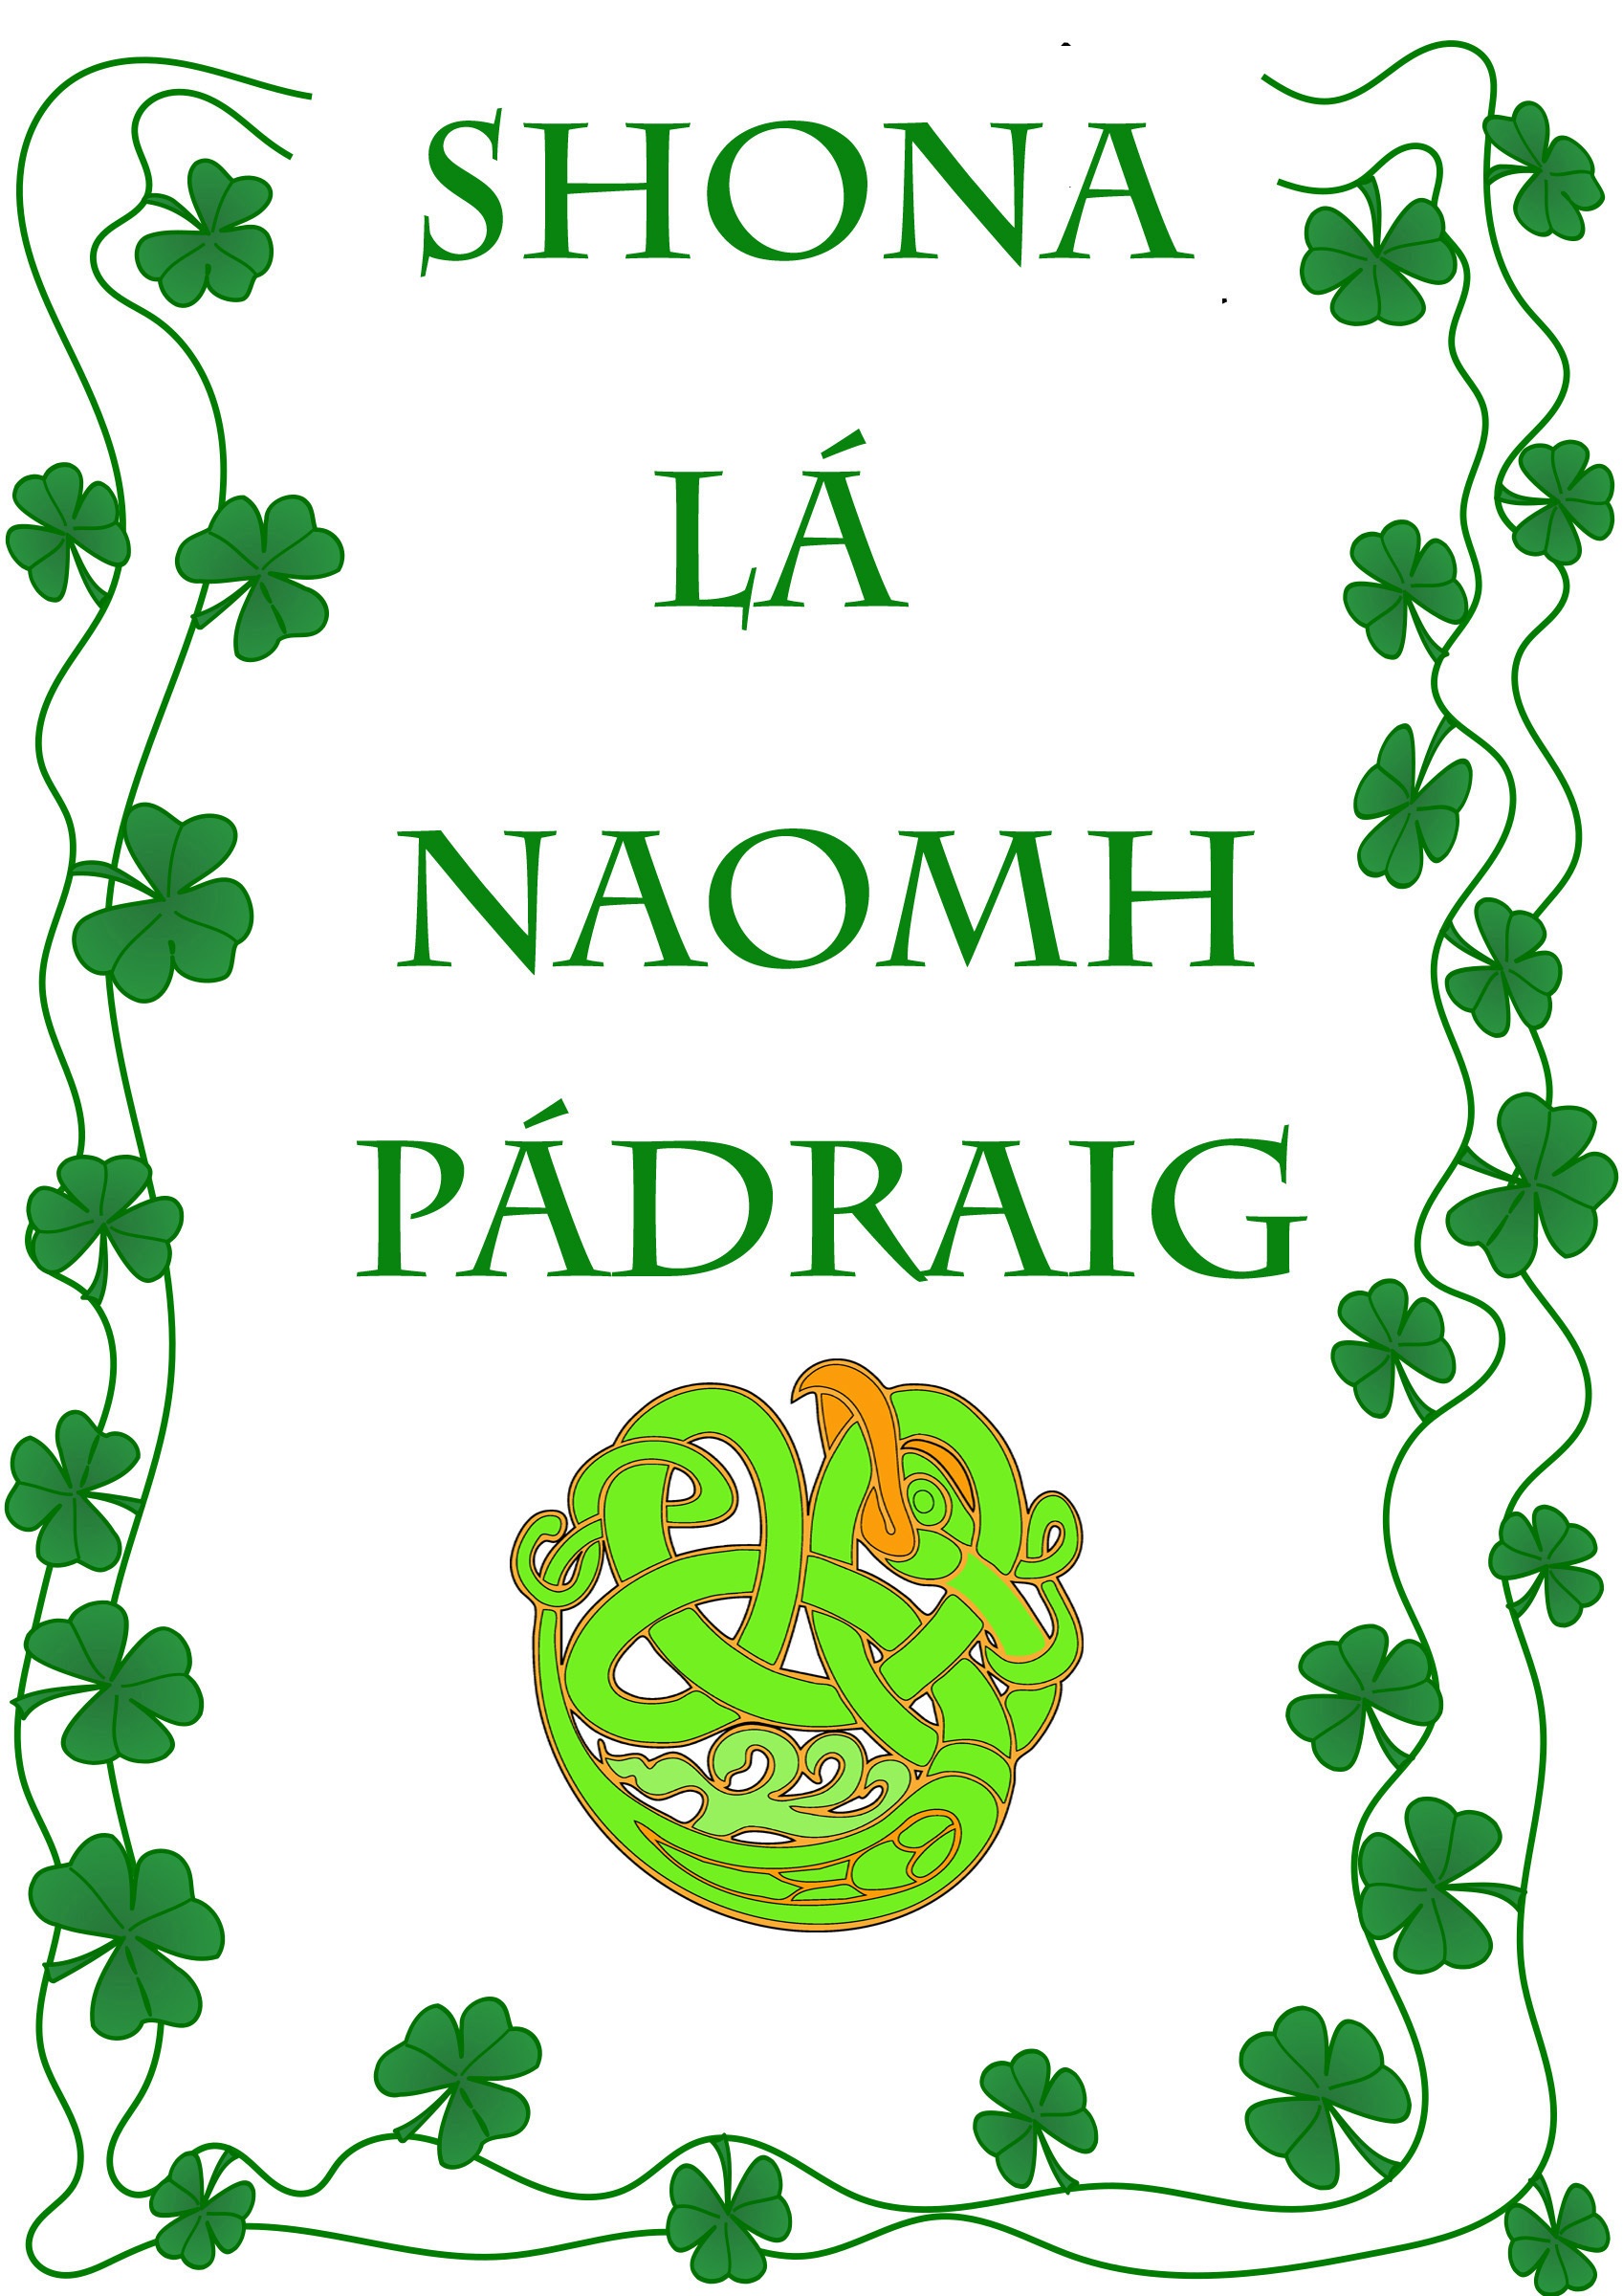 Saint Patricks day banner image Ireland